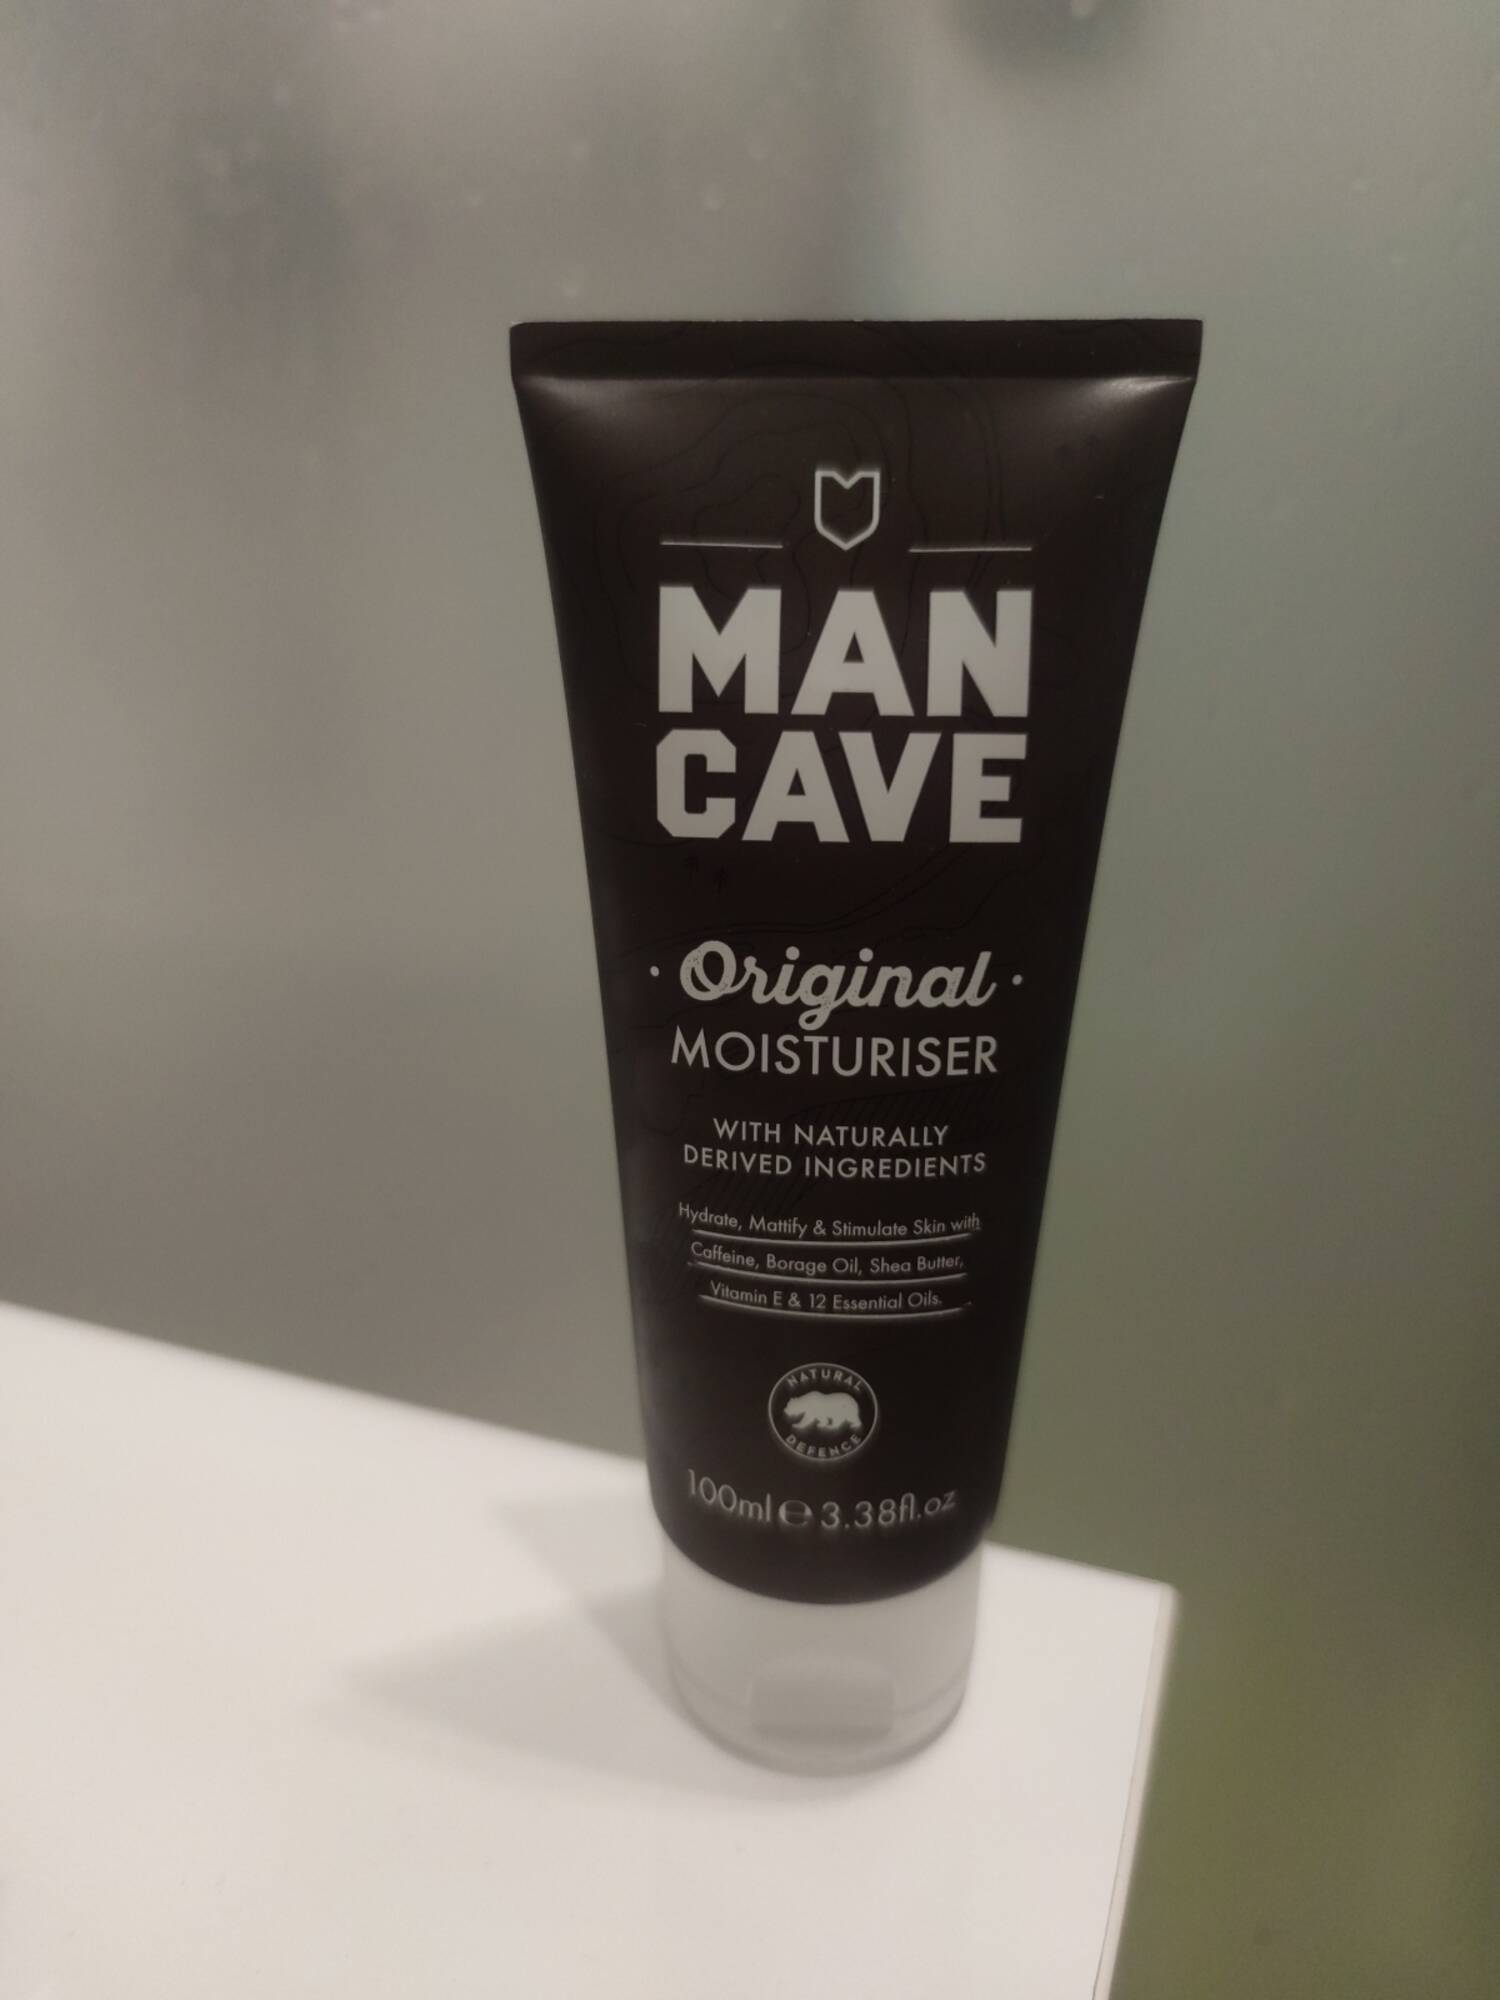 MAN CAVE - Original moisturiser 